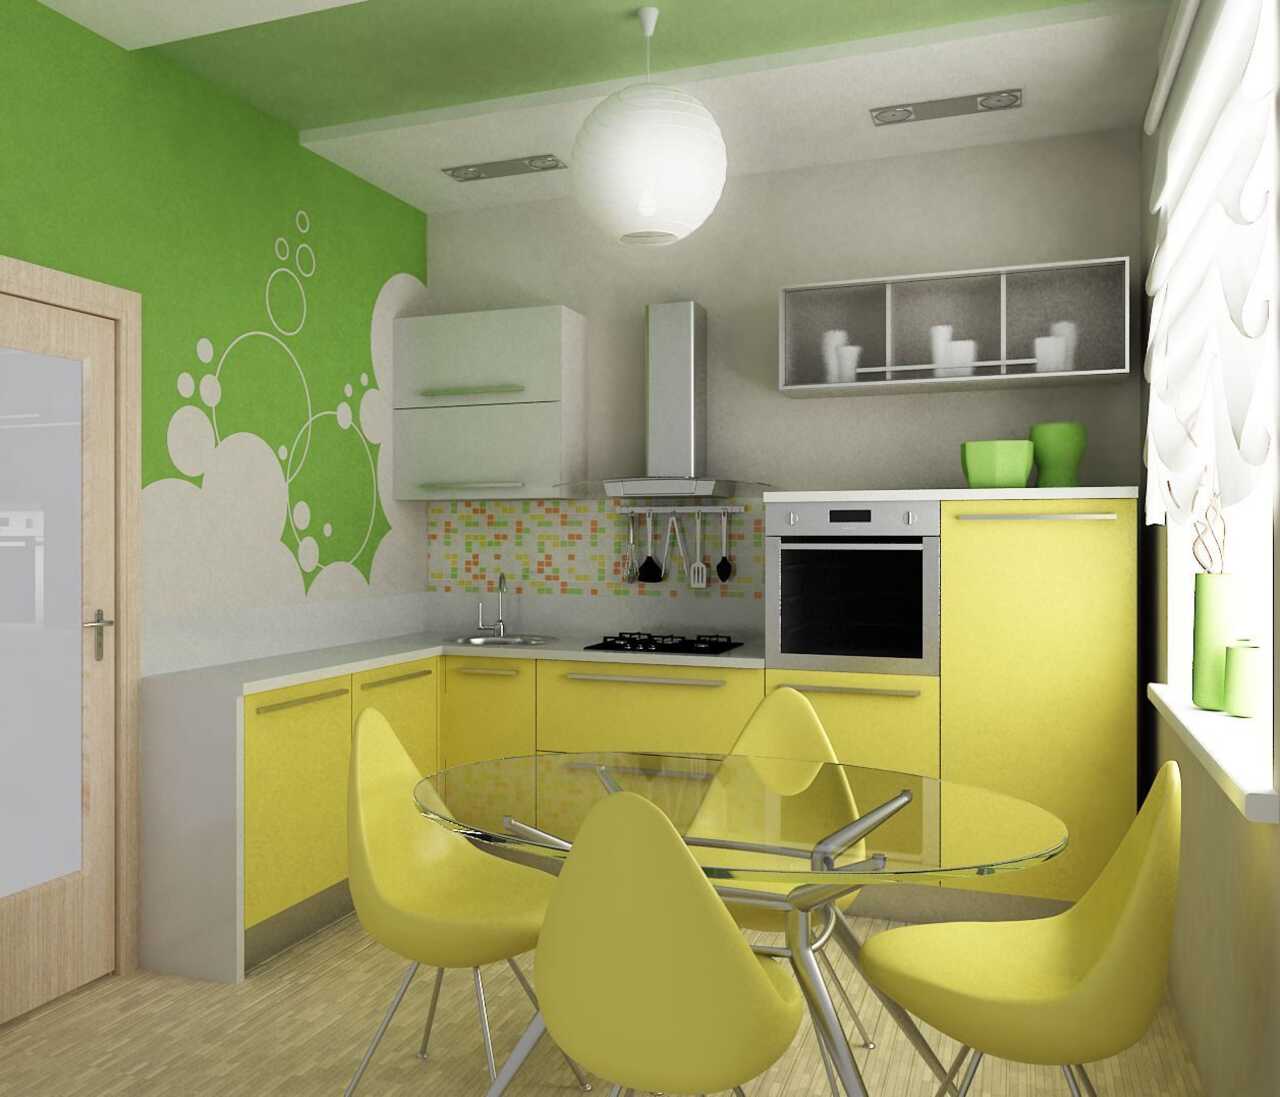 Желто зеленая кухня. Интерьер маленькой кухни. Кухня в желто зеленом цвете. Кухня для хрущевки. Интерьер зеленой кухни маленькой.